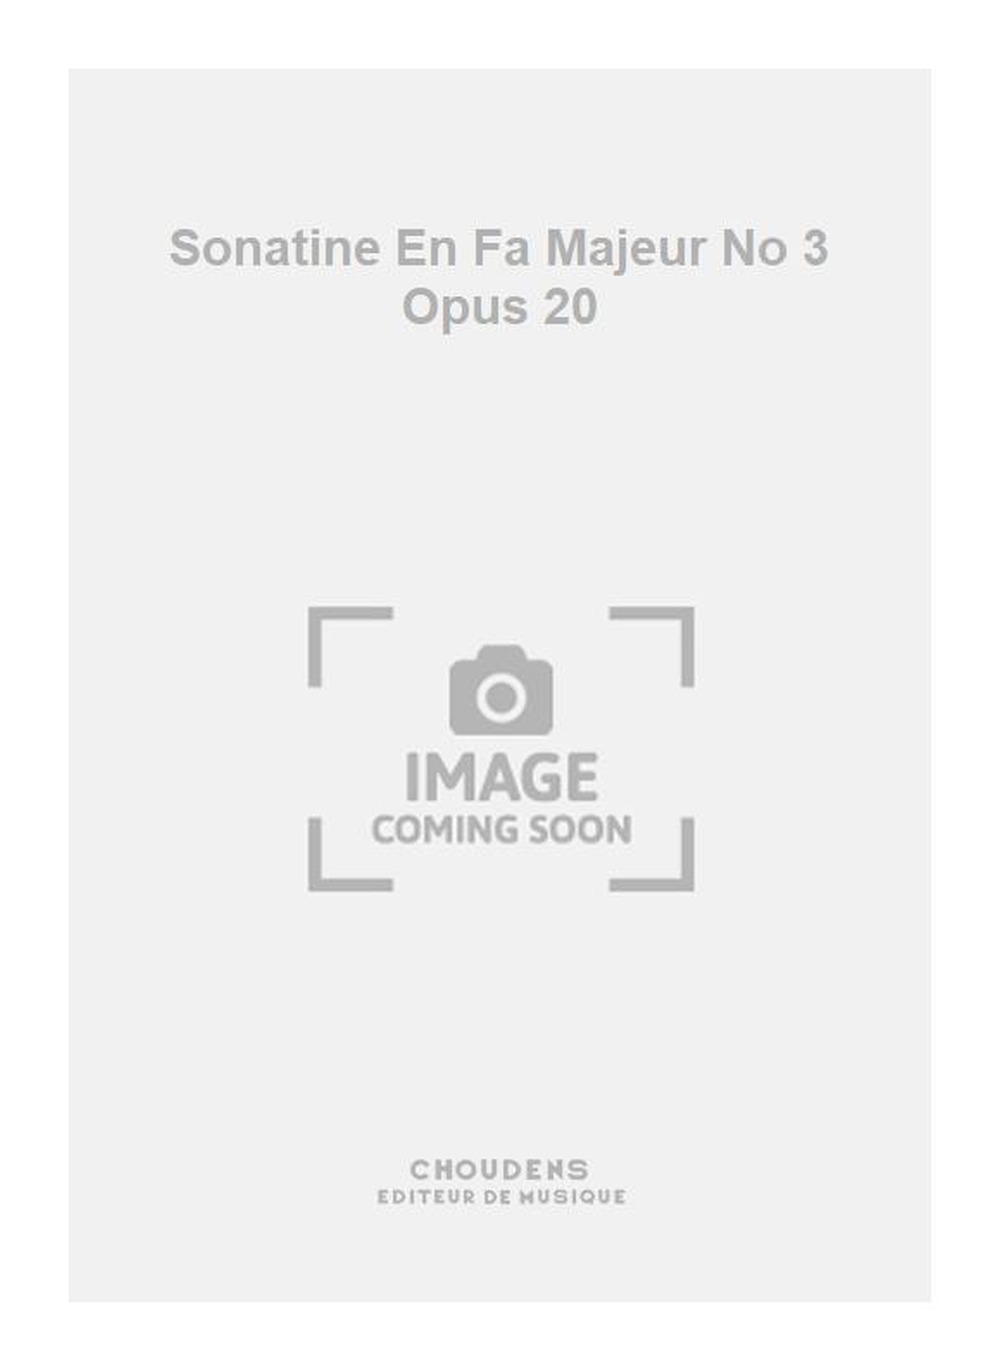 Dussek: Sonatine En Fa Majeur No 3 Opus 20